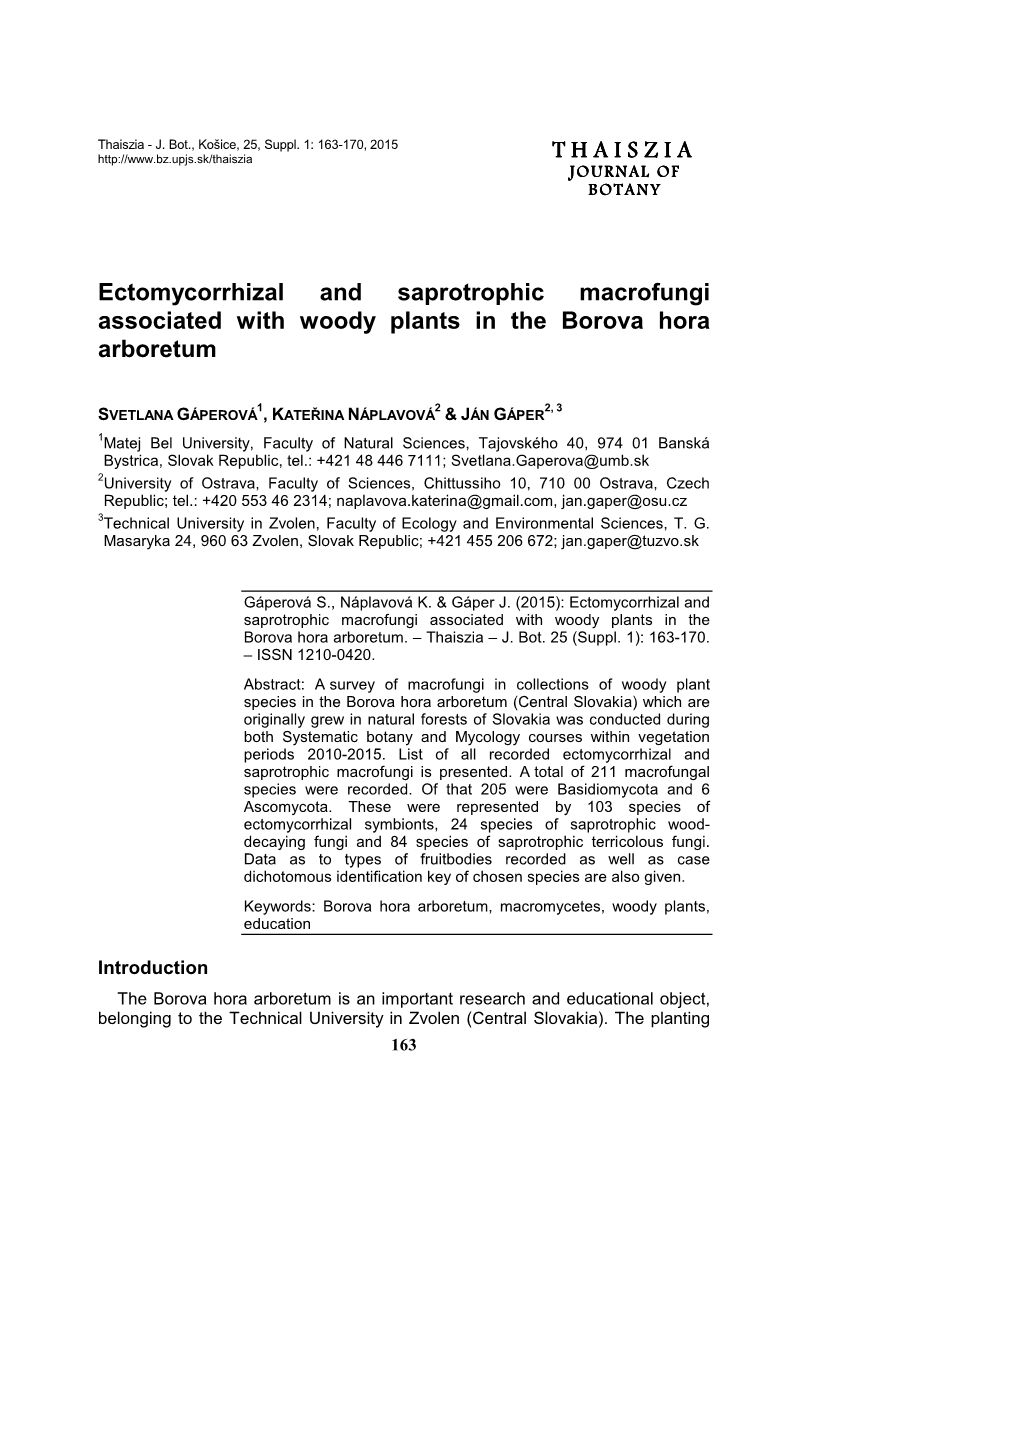 THAISZIA Ectomycorrhizal and Saprotrophic Macrofungi Associated